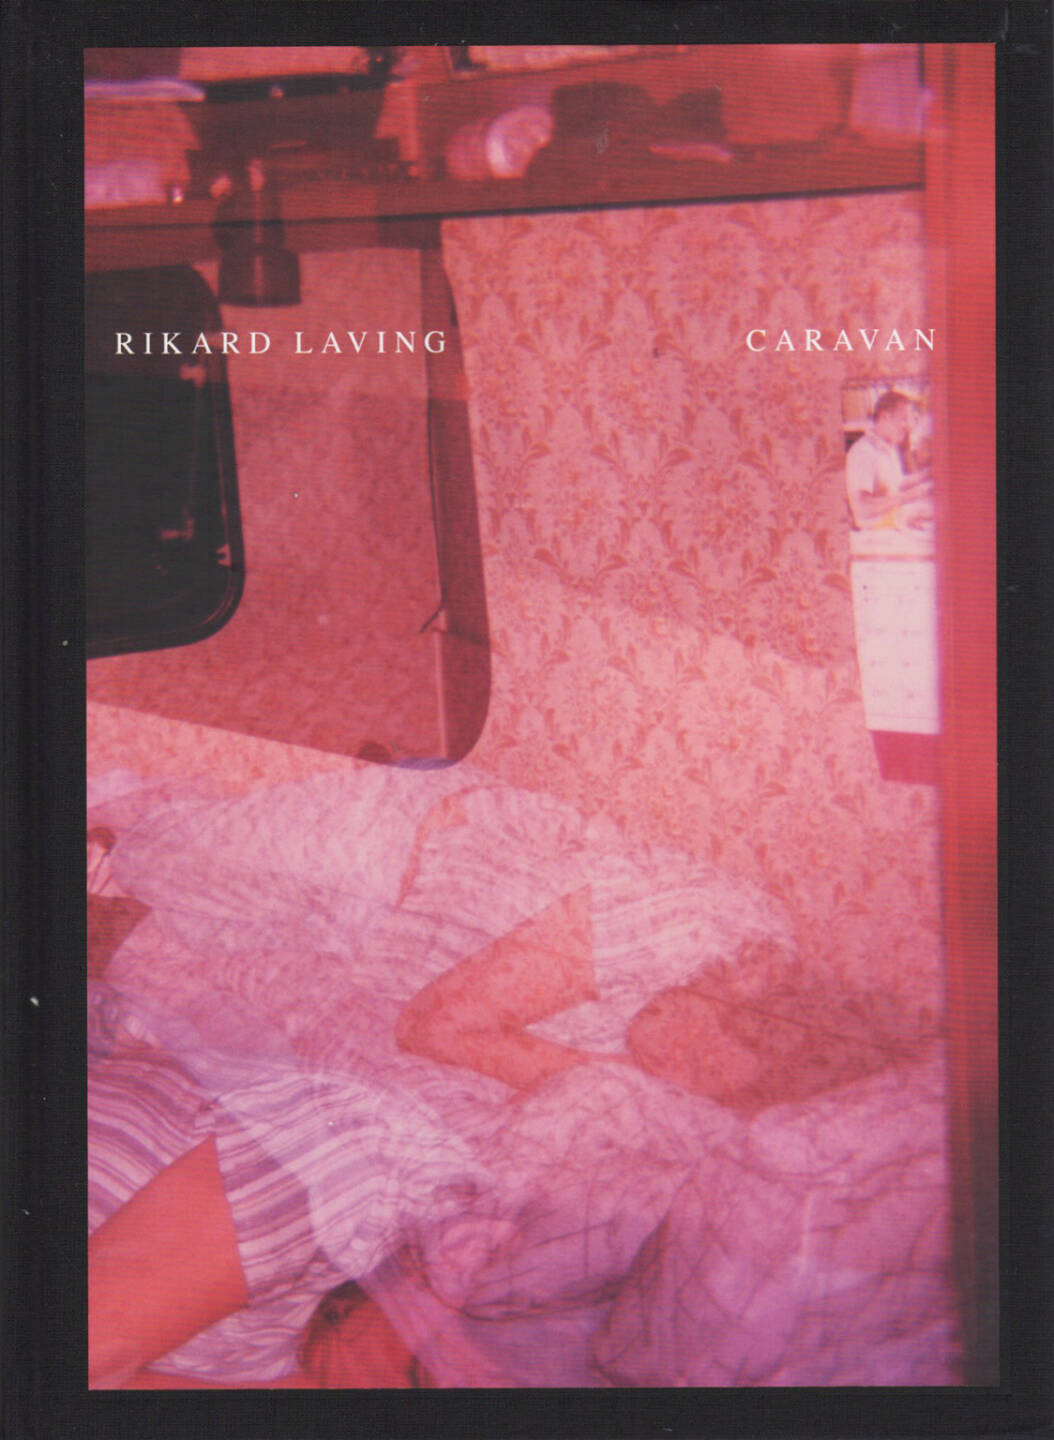 Rikard Laving - Caravan, Journal 2007, Cover - http://josefchladek.com/book/rikard_laving_-_caravan